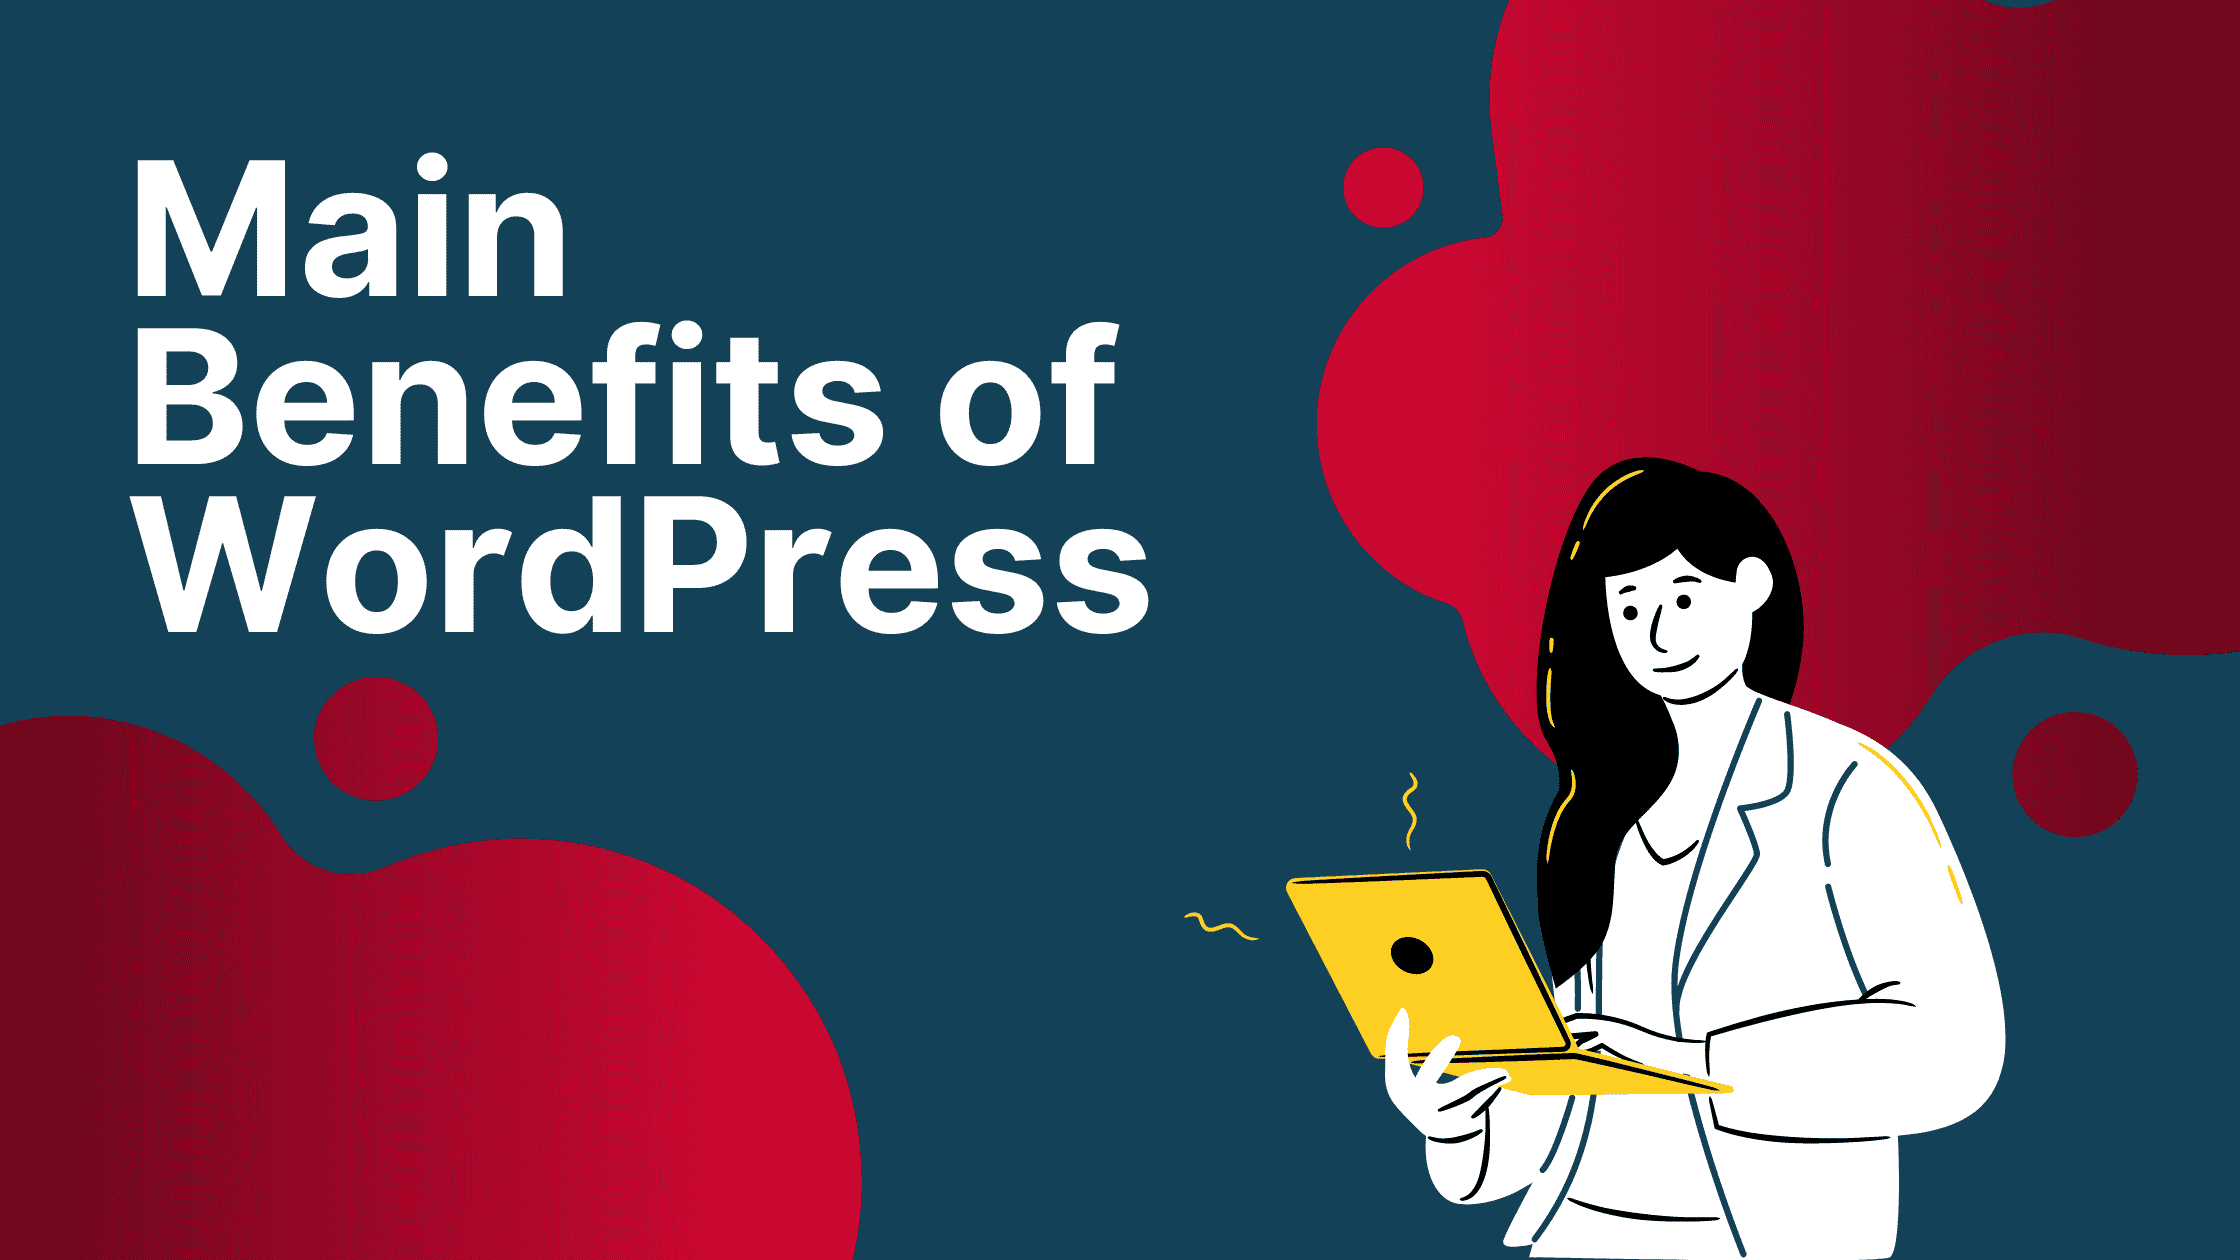 The image shows a list of the main benefits of using WordPress, a popular website development platform.